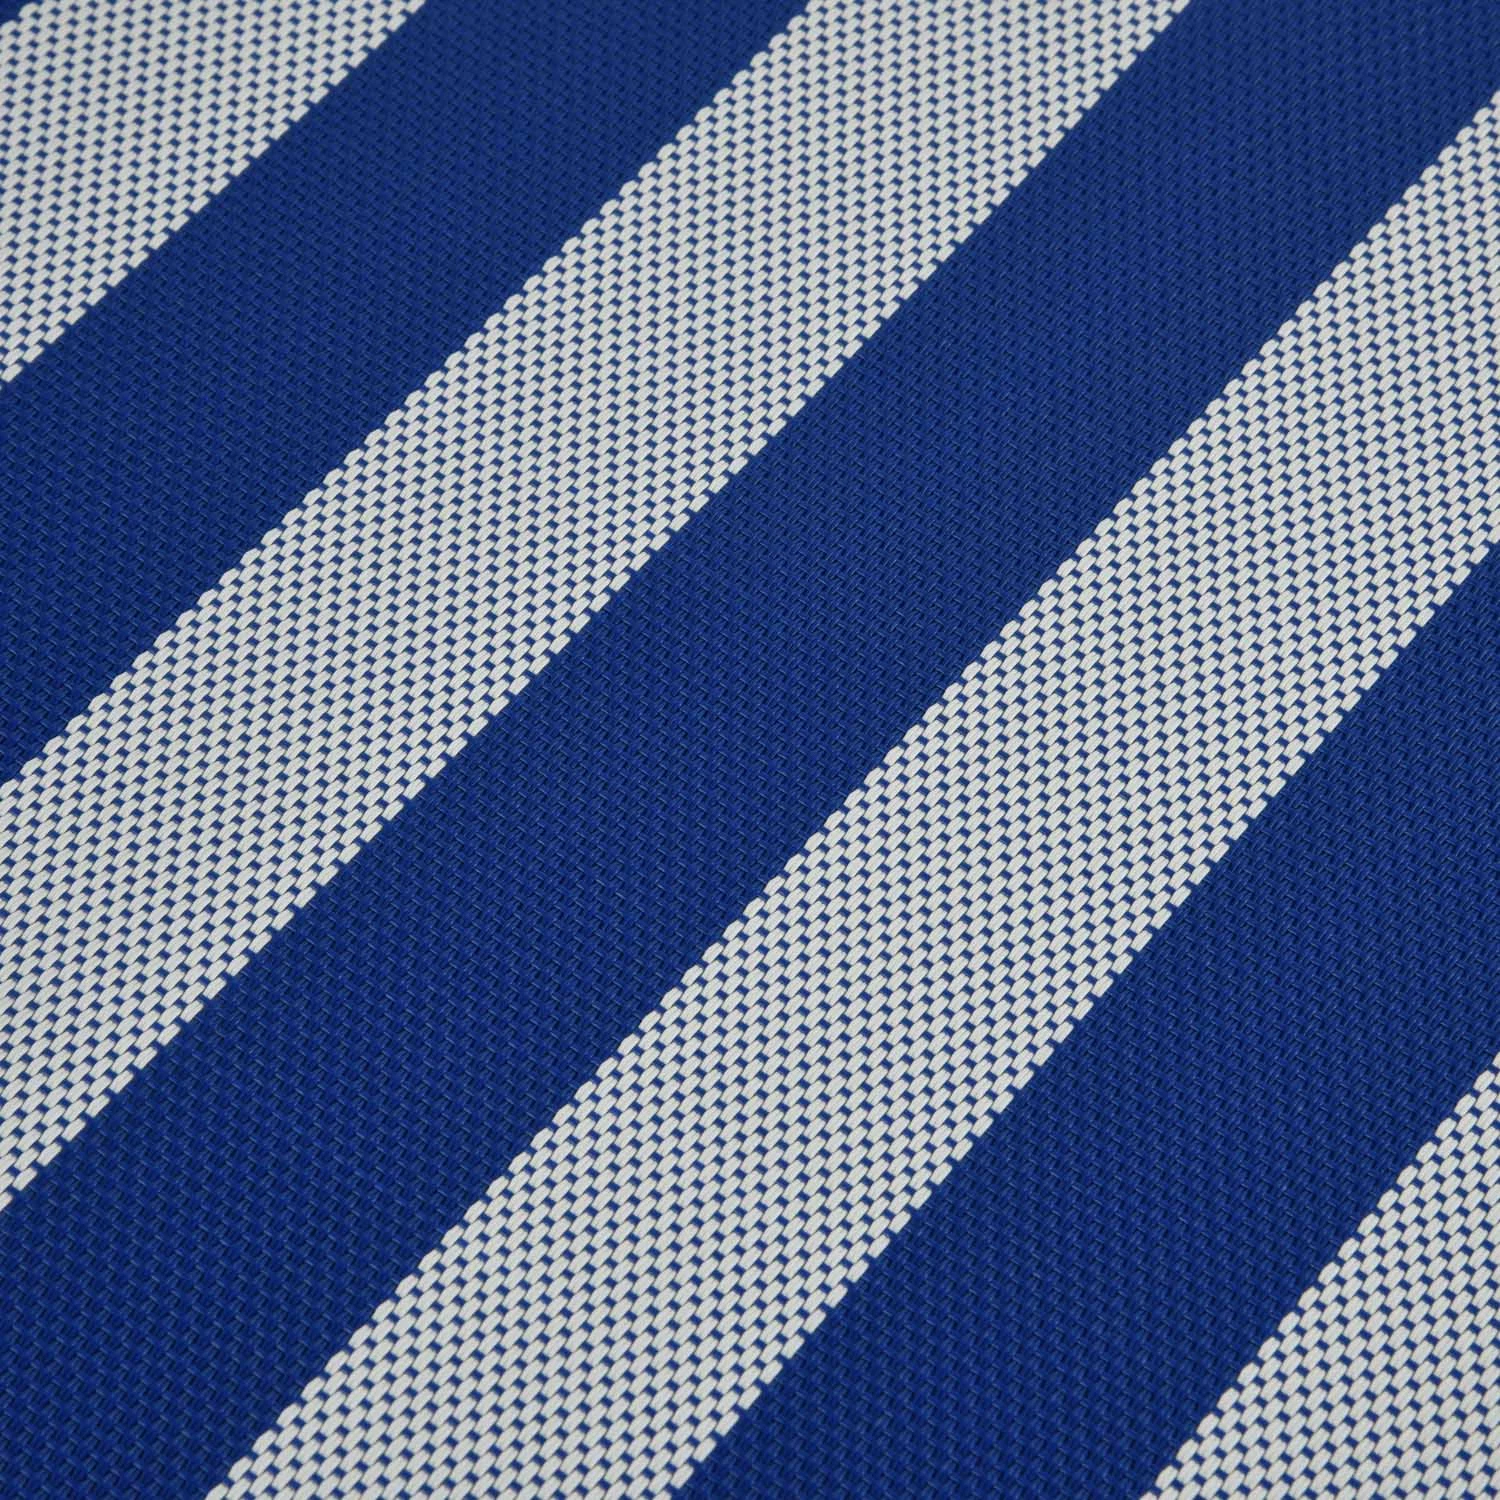 Znz Fabric Woven Jacquard PVC Mesh Tatami Fabric for Rug